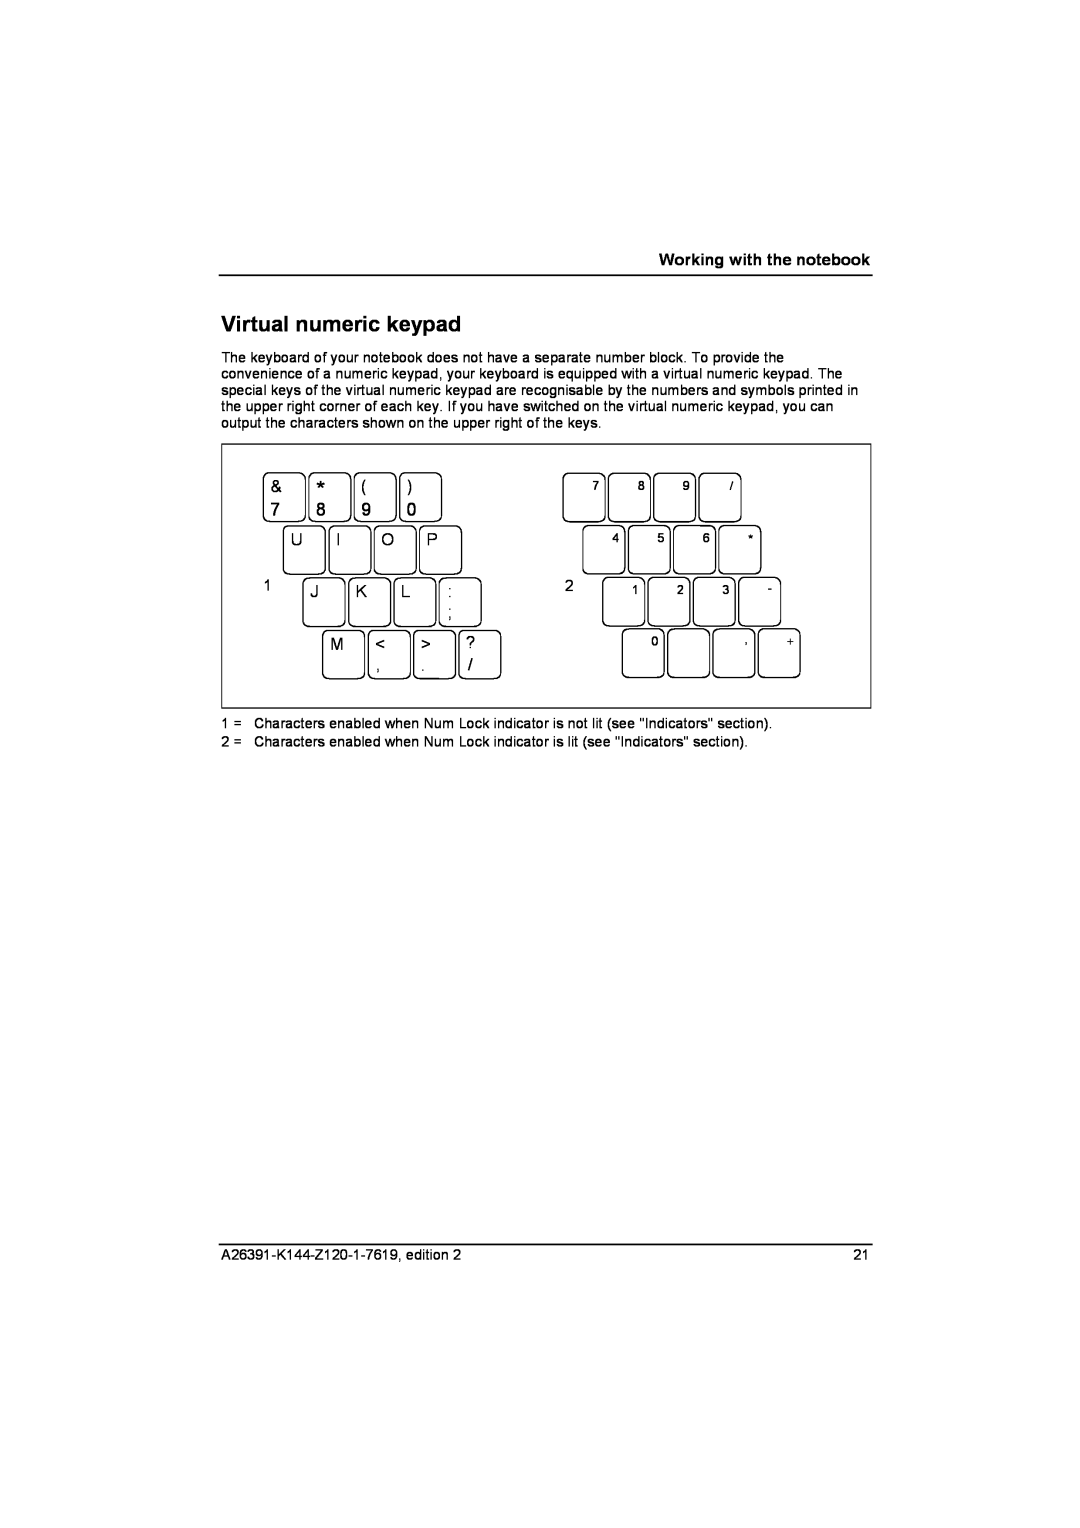 Fujitsu S SERIES manual Virtual numeric keypad, Working with the notebook 